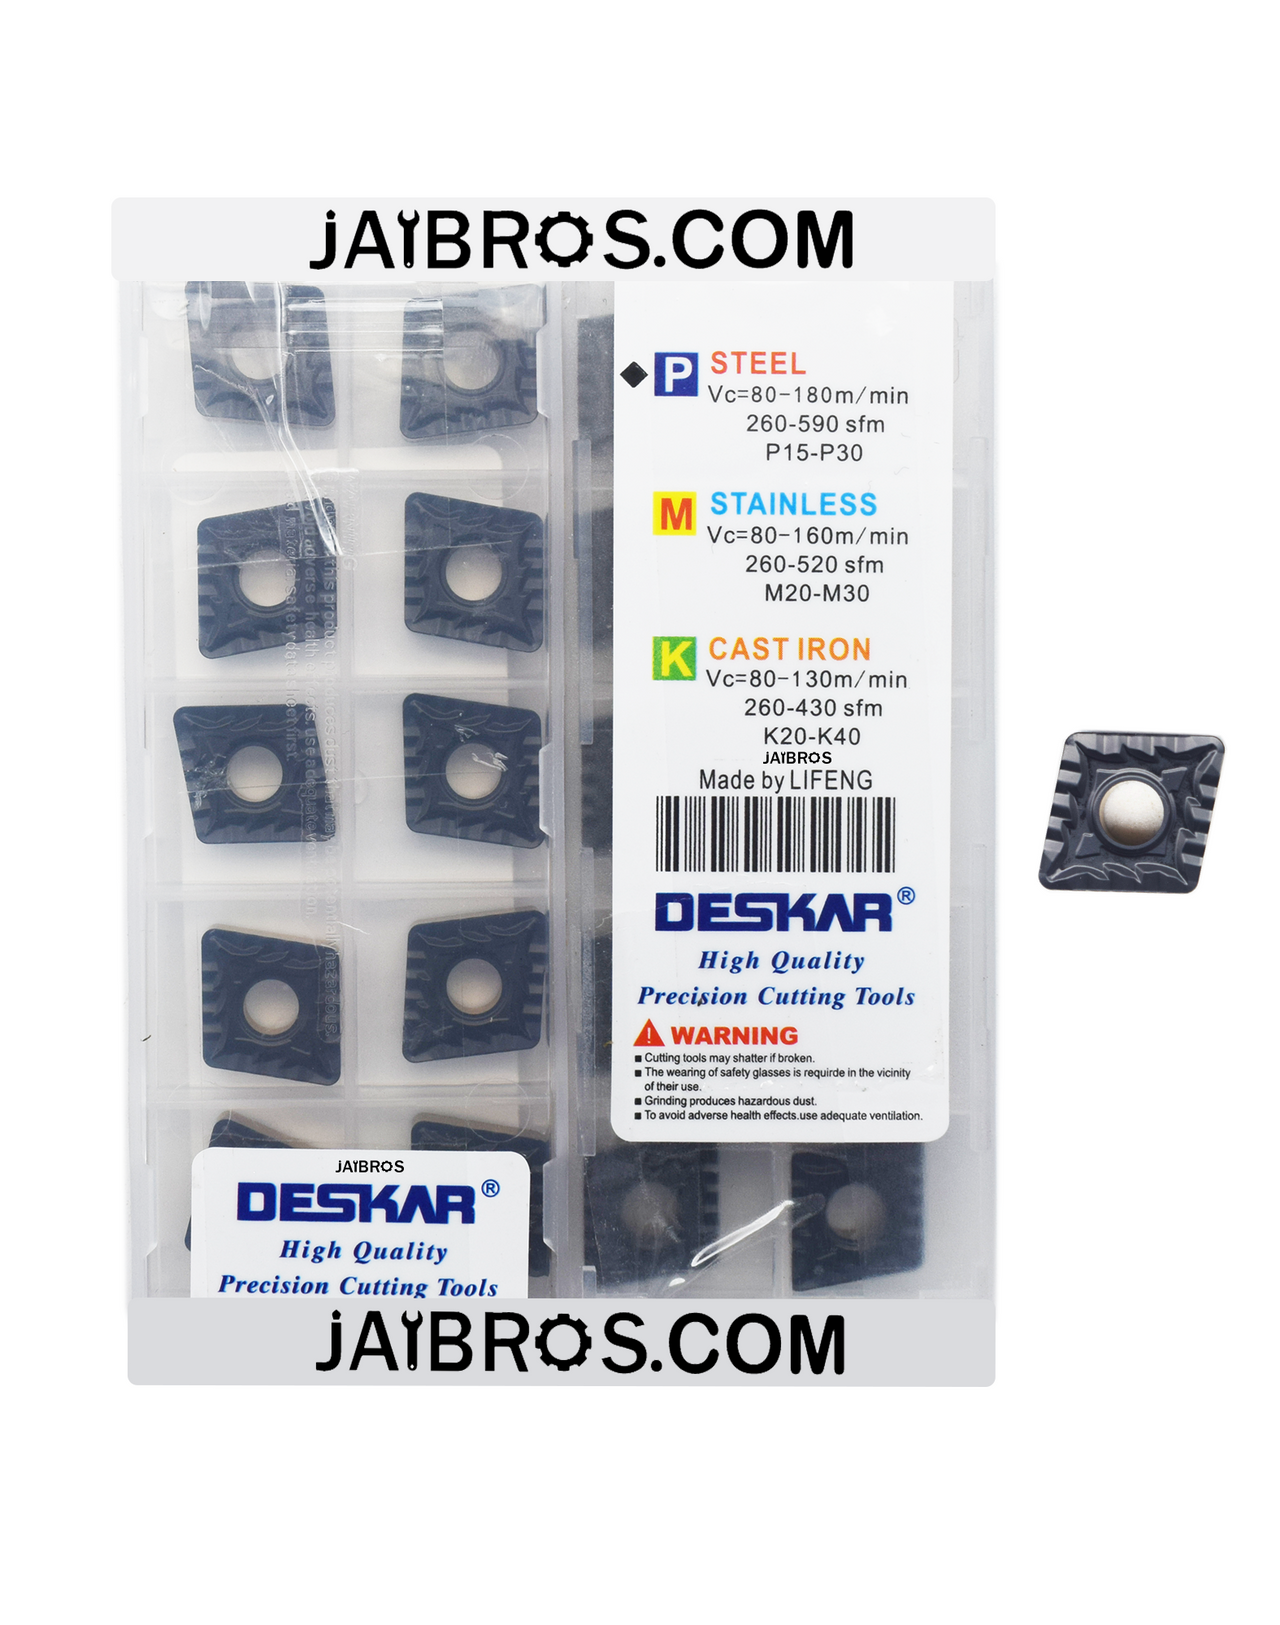 Deskar CNMG120408/12 CQ LF9218 steel and stainless steel grade insert pack of 10